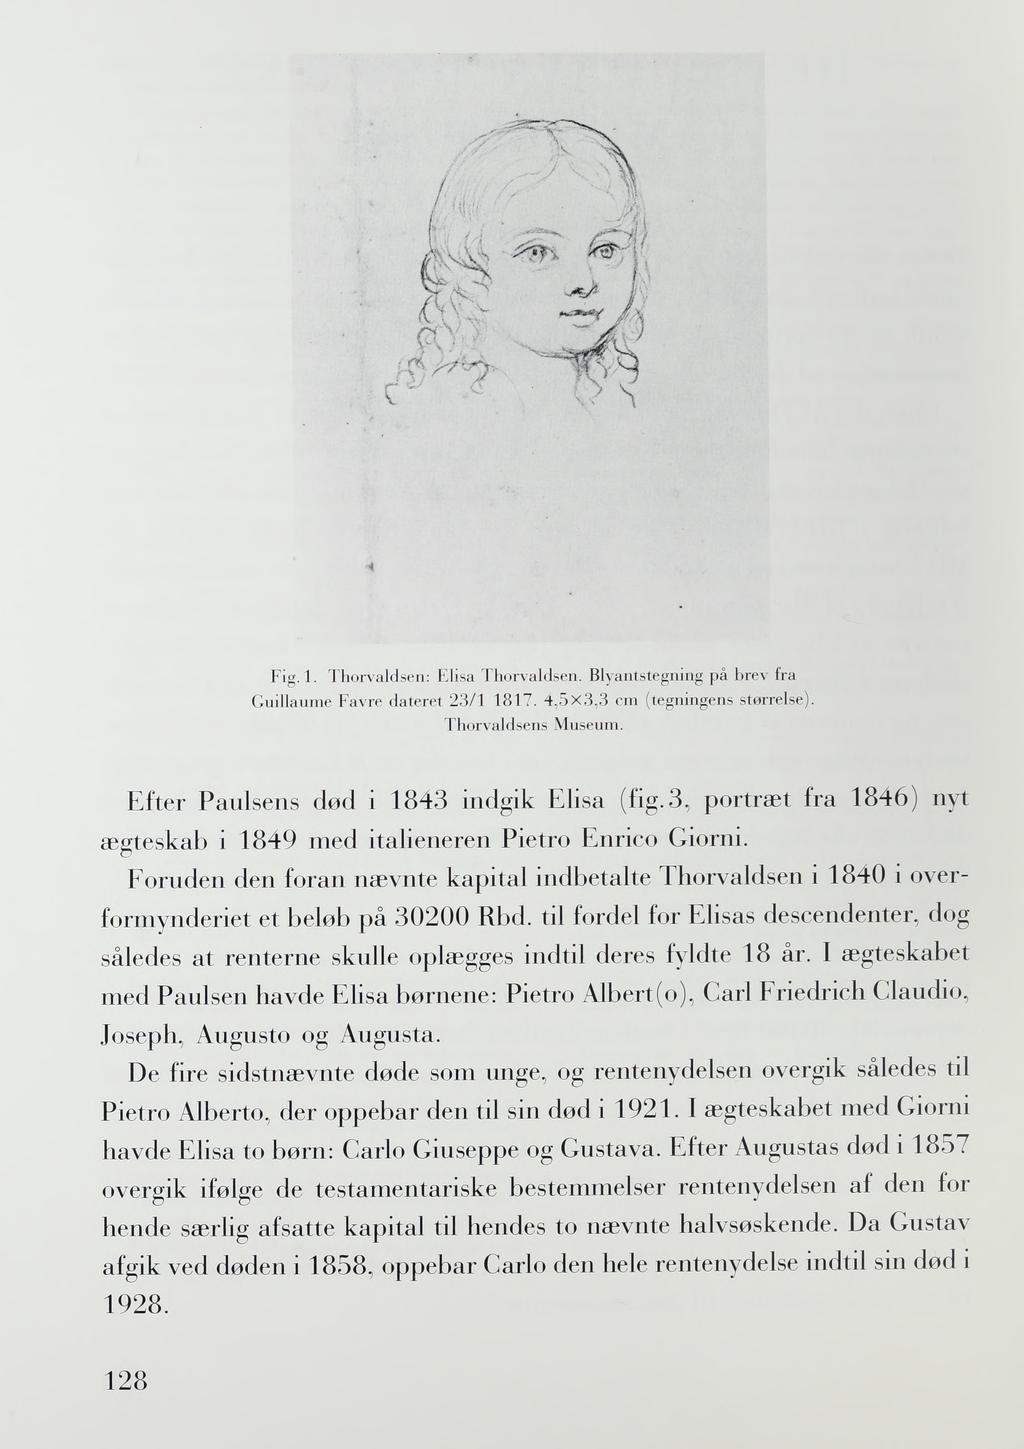 F ig.1. Thorvaldsen: Elisa Thorvaldsen. Blyantstegning på brev fra Guillaume Favre dateret 23/1 1817. 4,5x3,3 cm (tegningens størrelse). Thorvaldsens Museum.